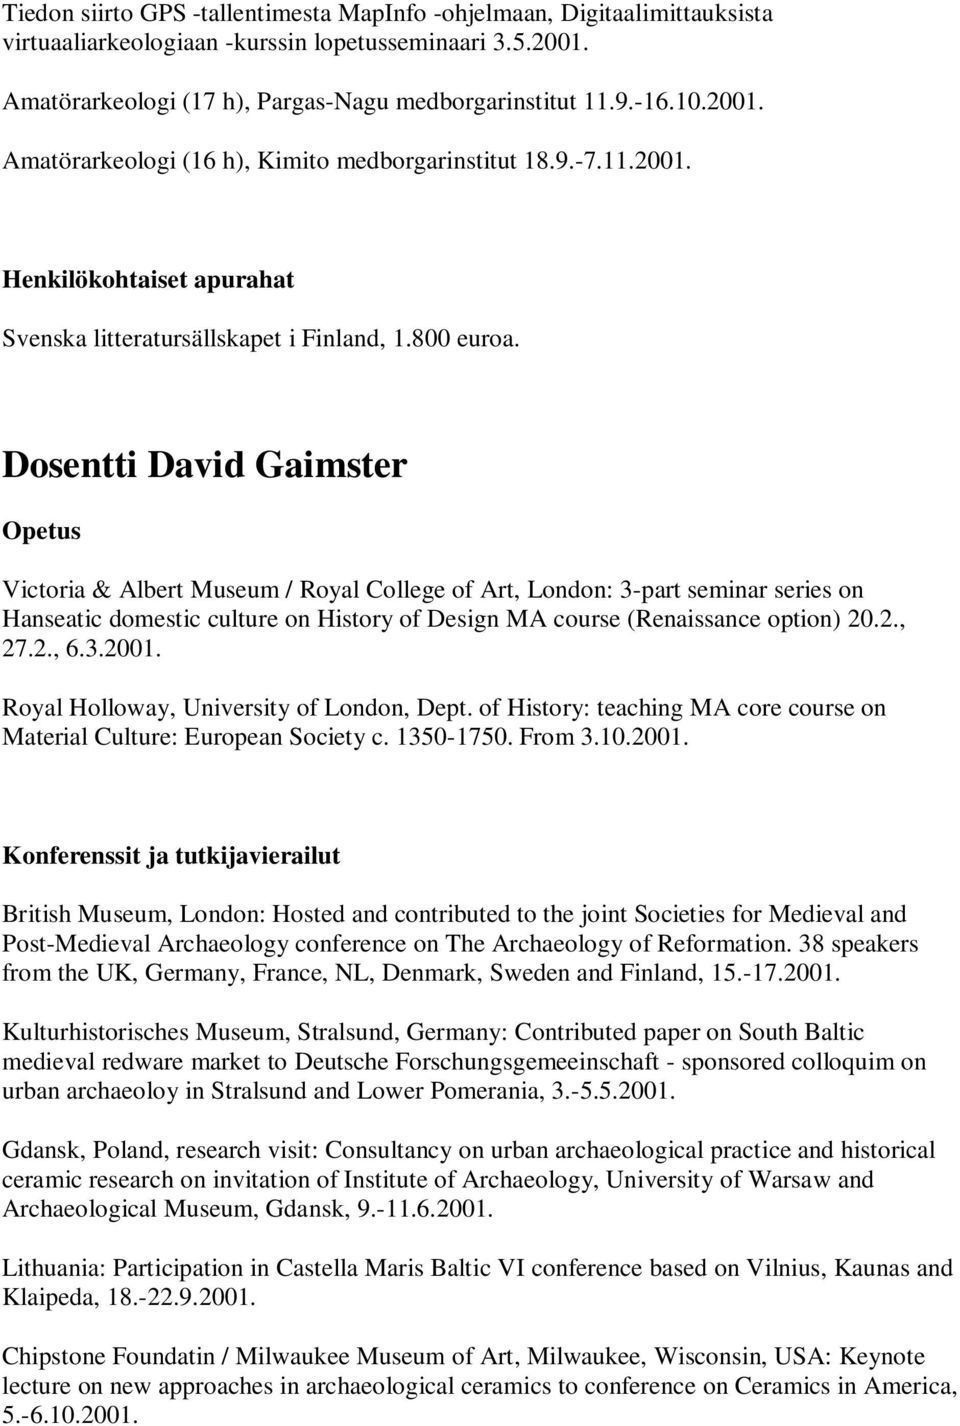 Dosentti David Gaimster Opetus Victoria & Albert Museum / Royal College of Art, London: 3-part seminar series on Hanseatic domestic culture on History of Design MA course (Renaissance option) 20.2., 27.